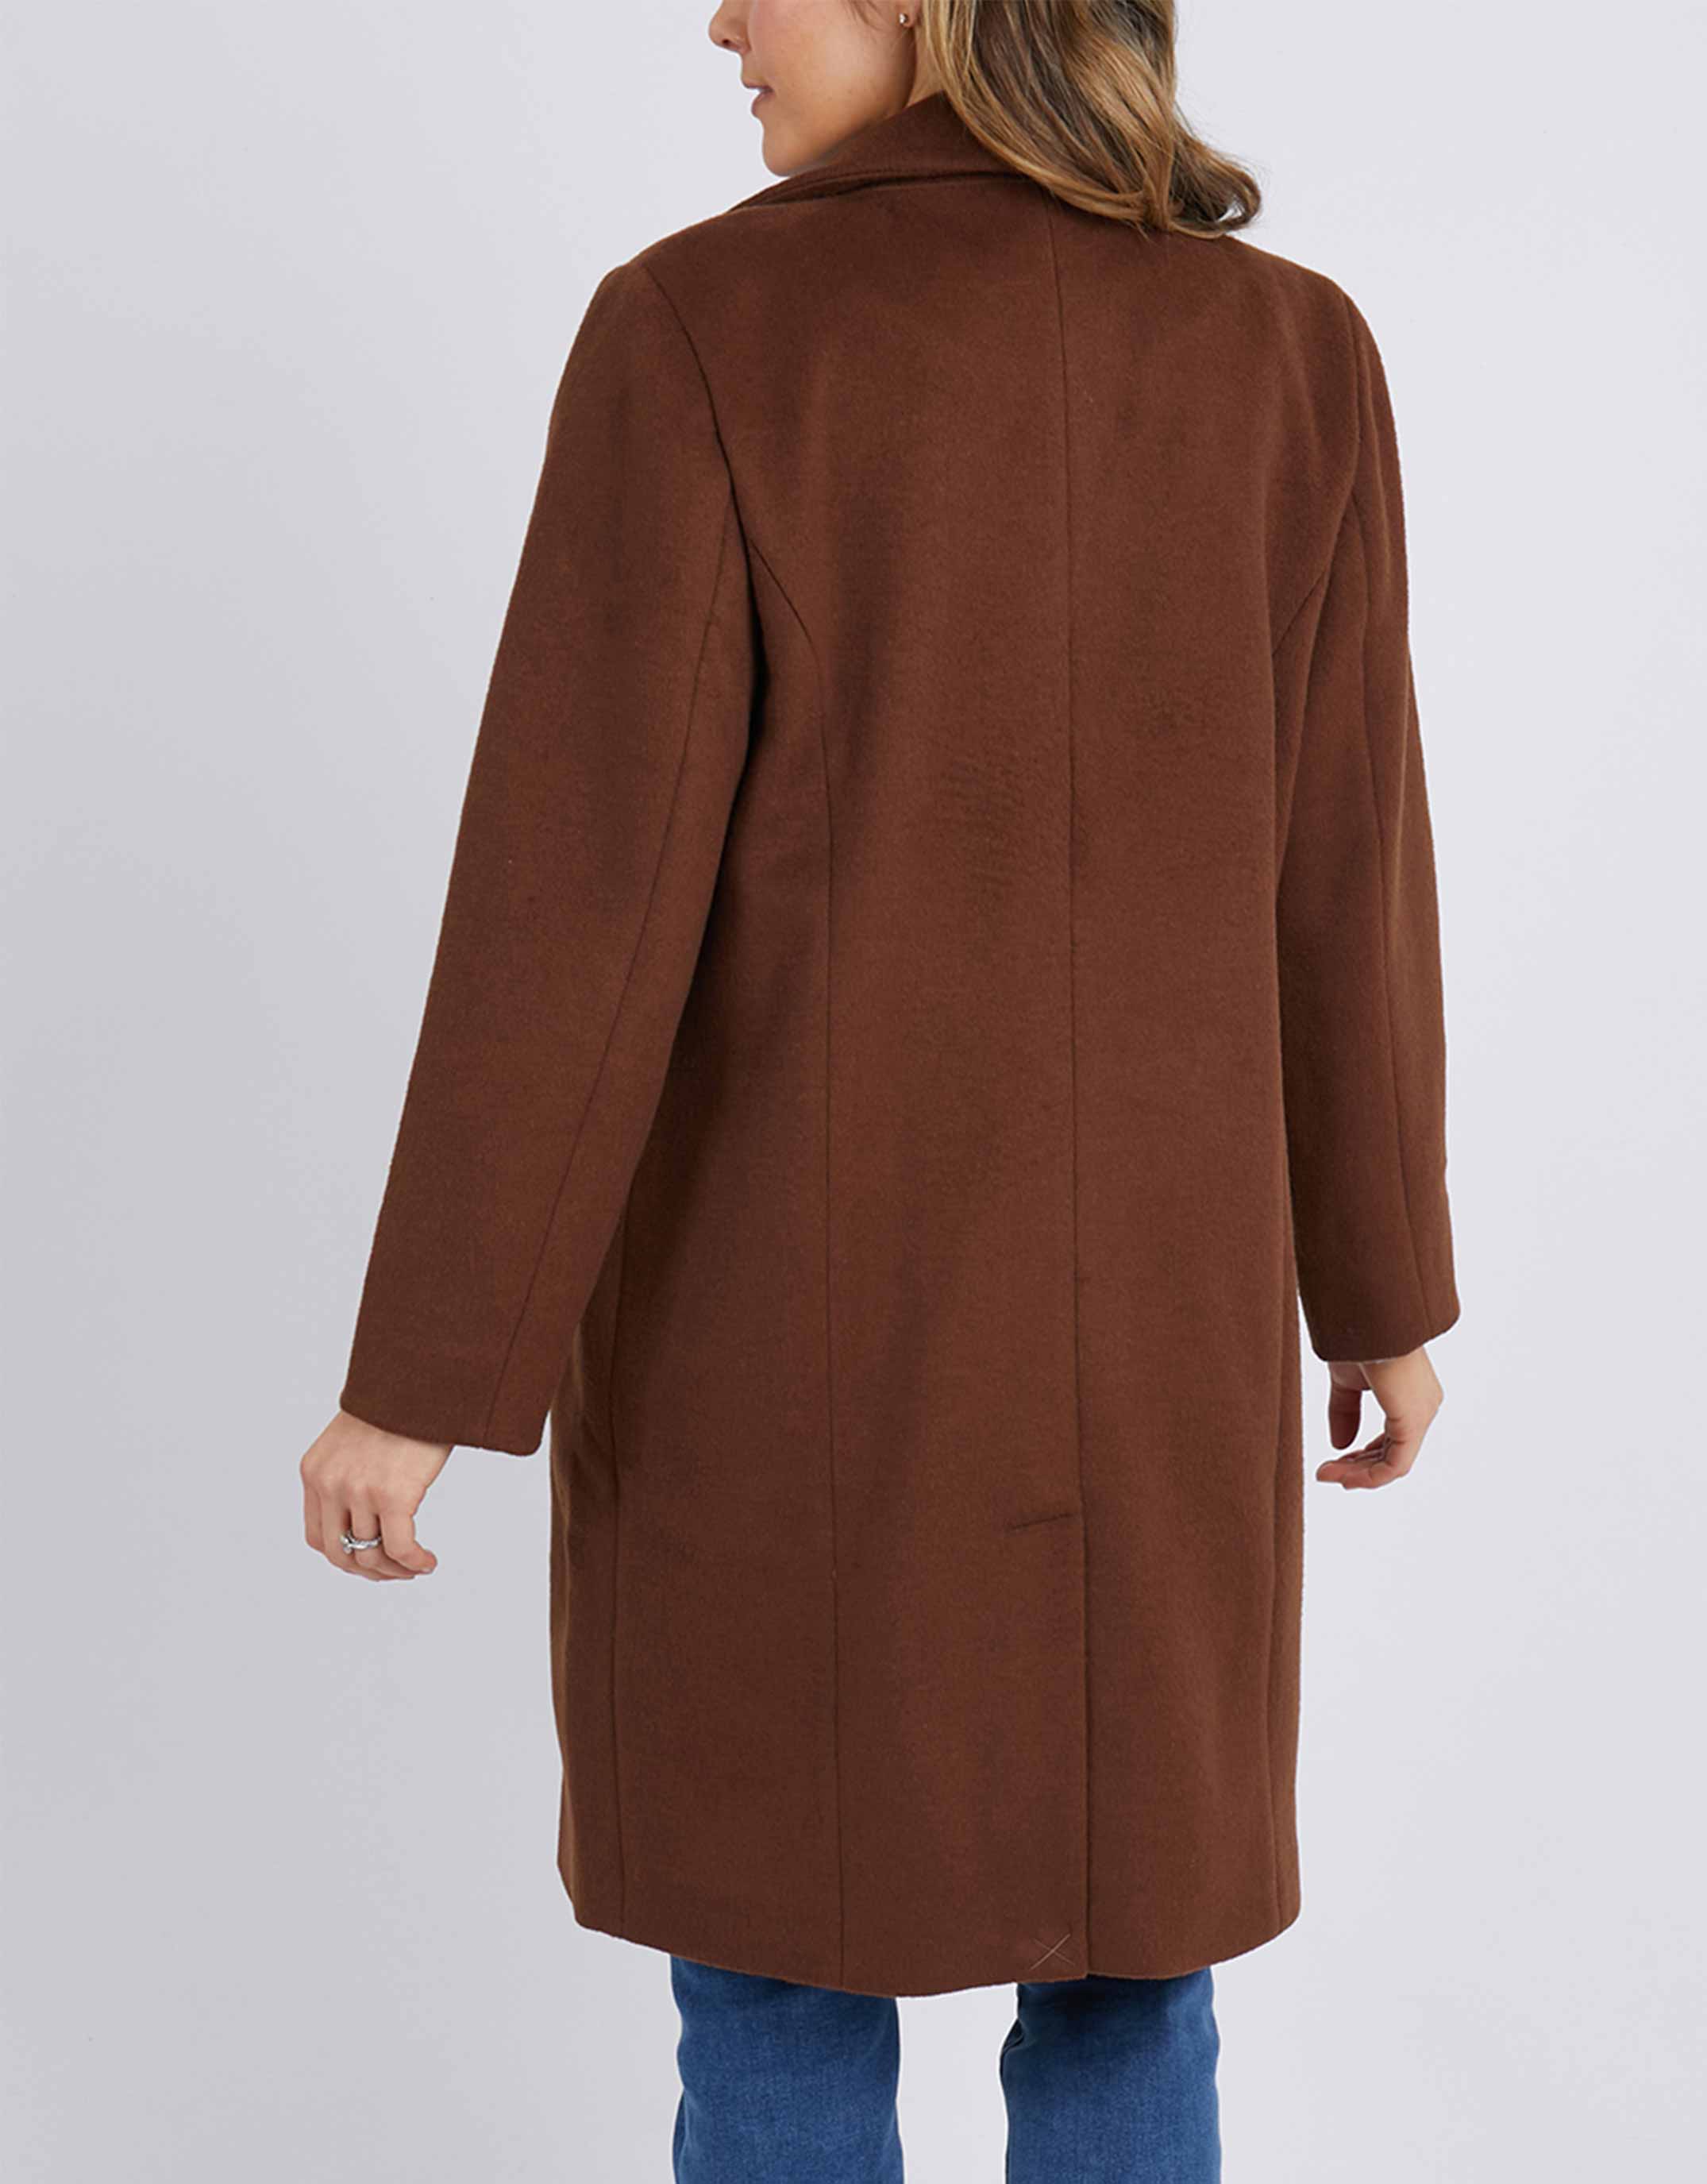 elm-tamsin-coat-chocolate-womens-clothing